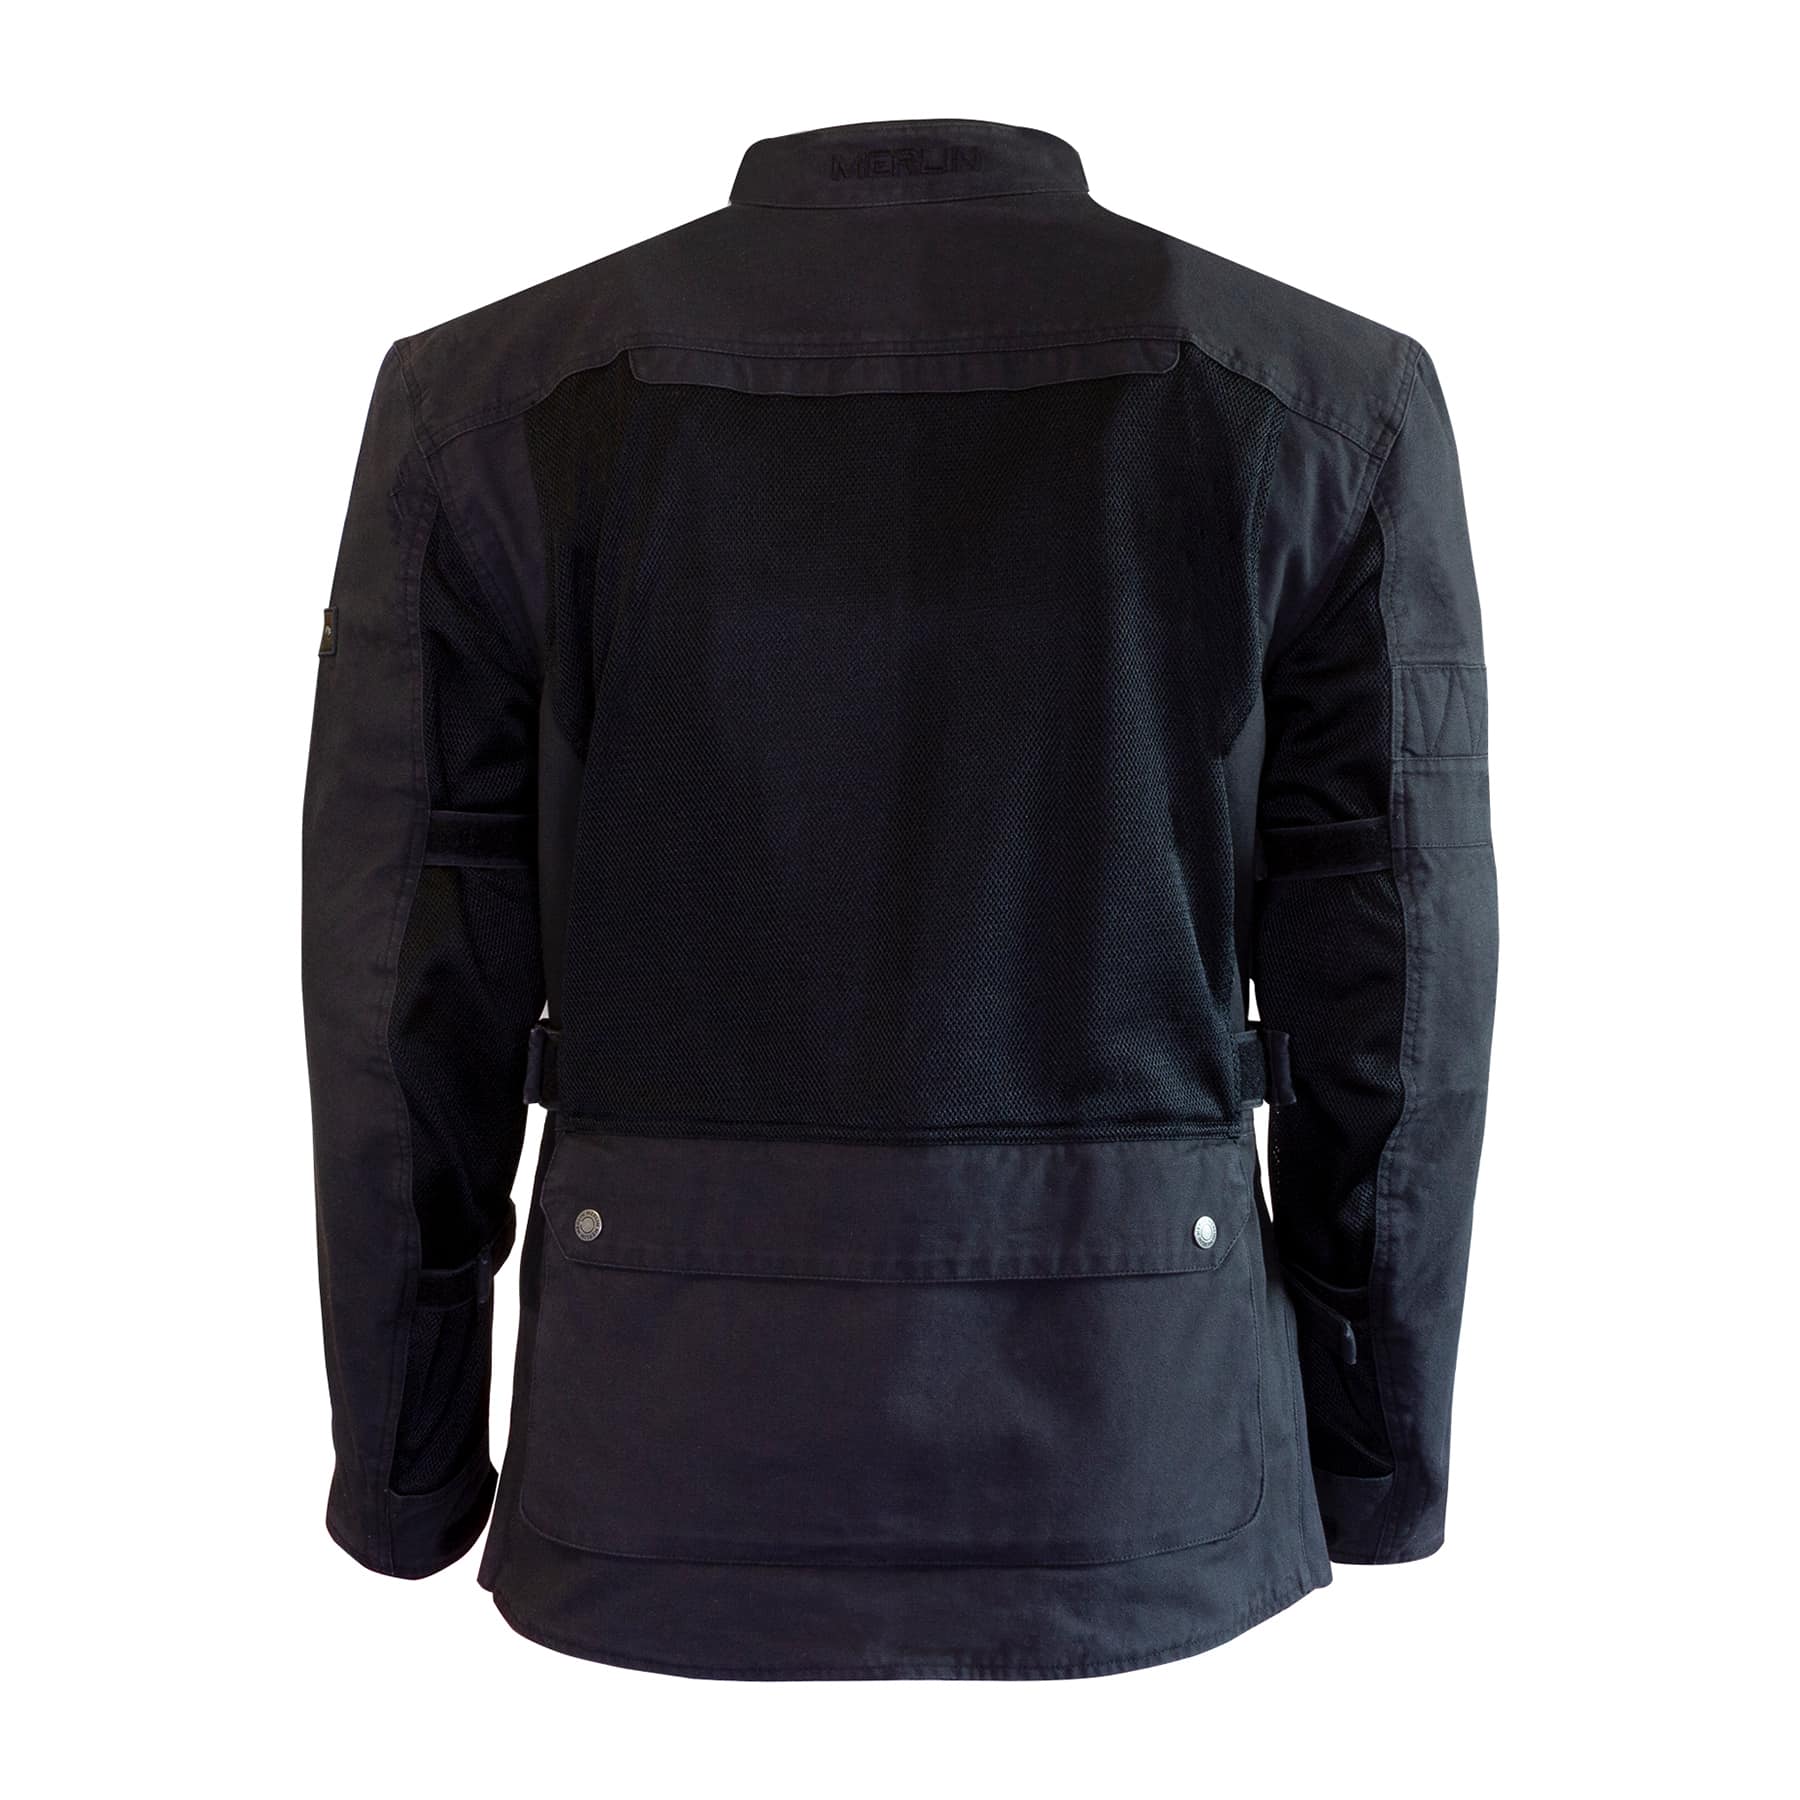 Merlin Mahala Raid jacket in black